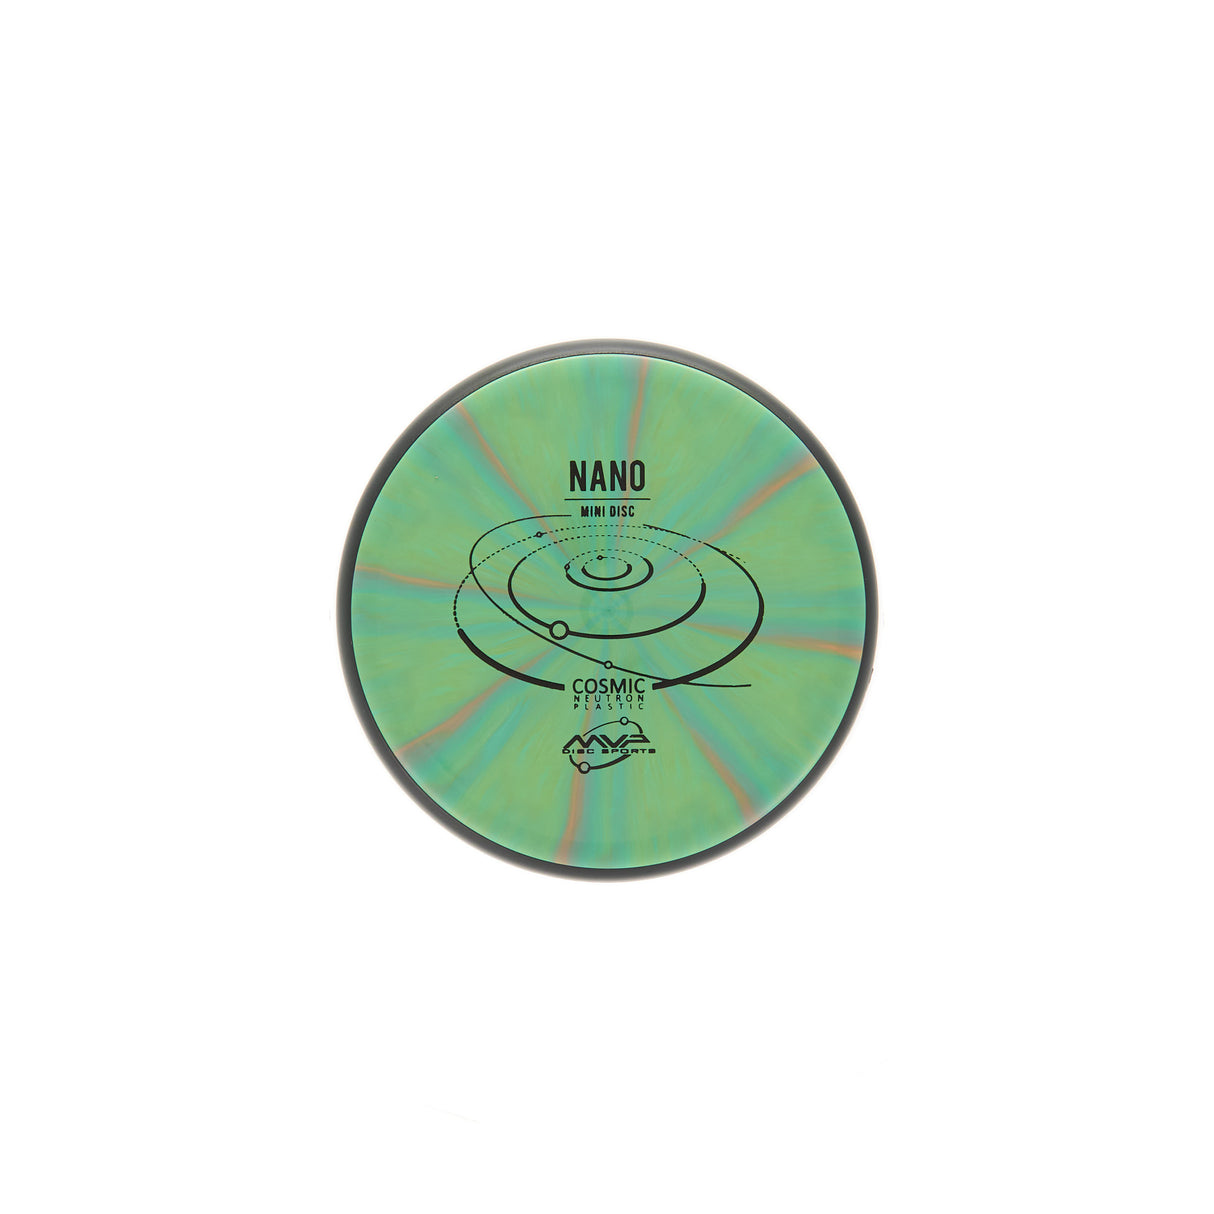 MVP Nano - Cosmic Neutron 30g | Style 0046